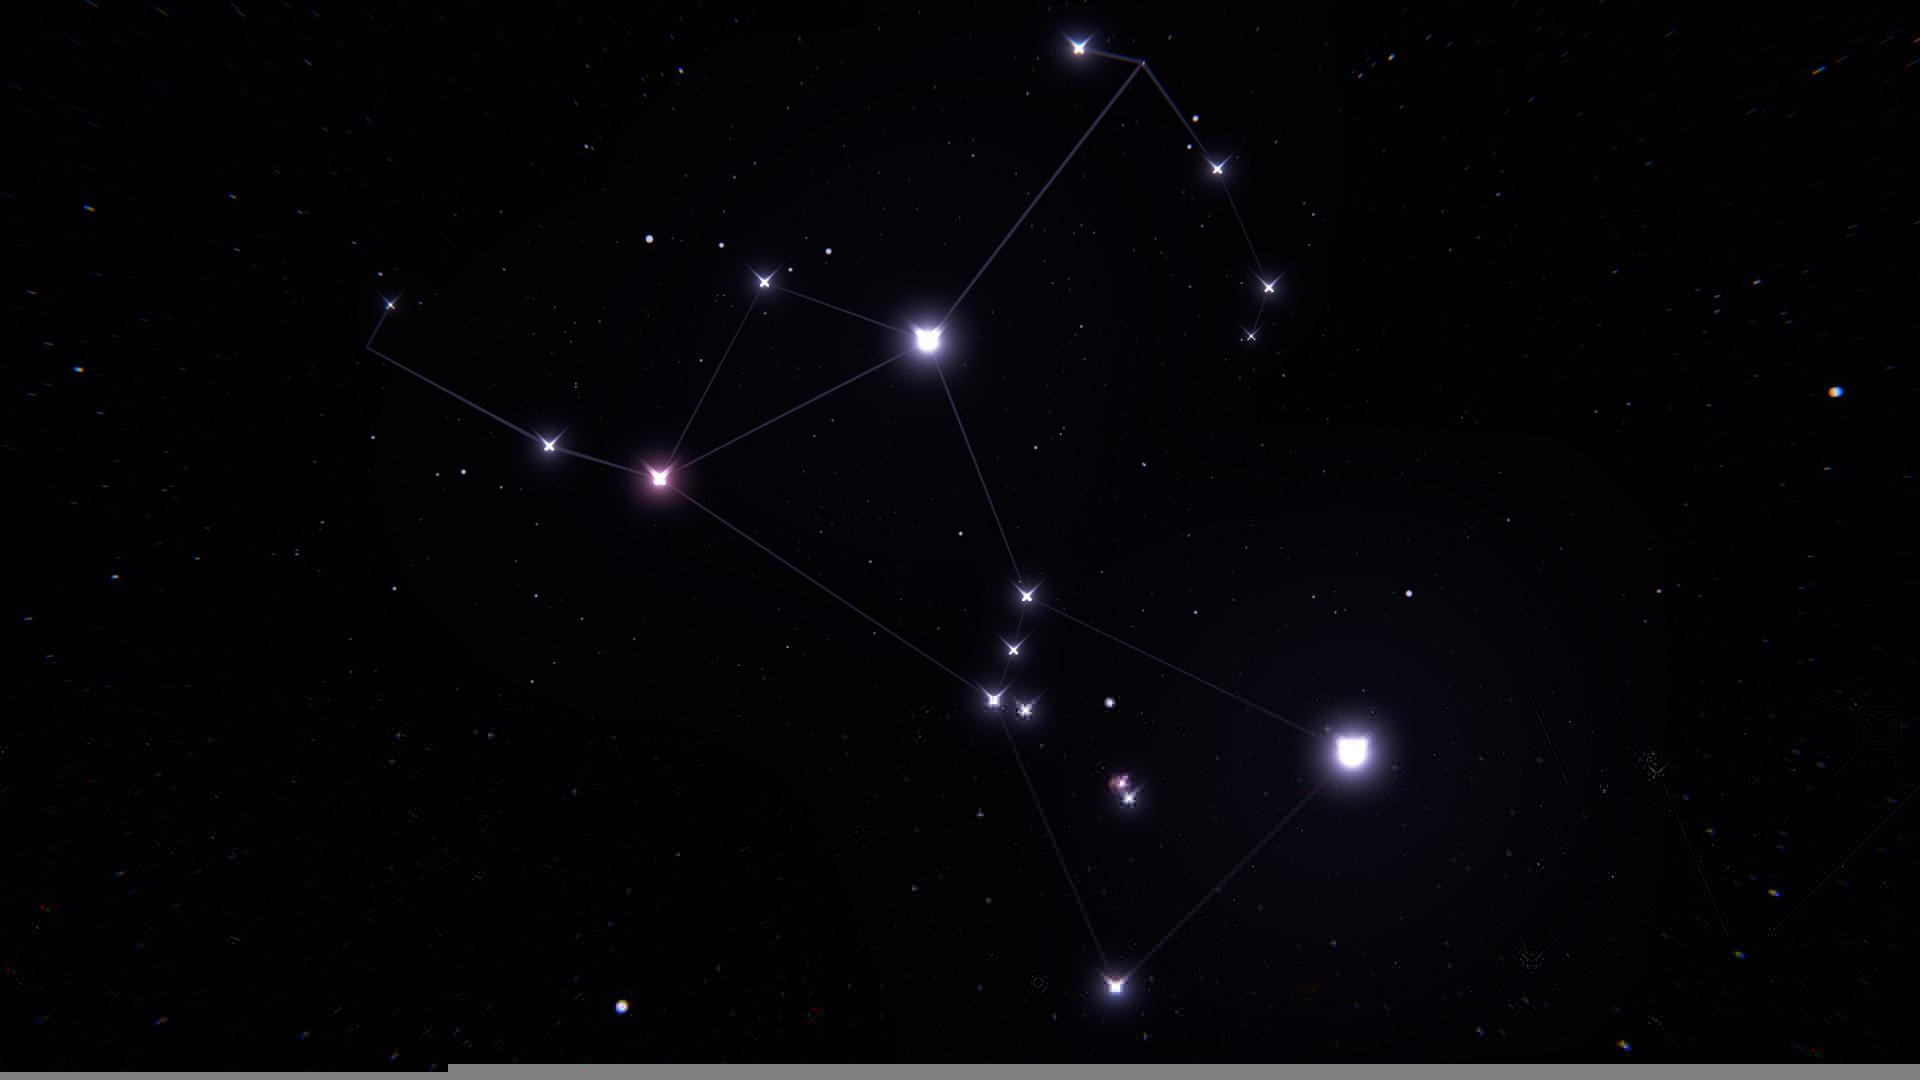 Orion Constellation Wallpaper